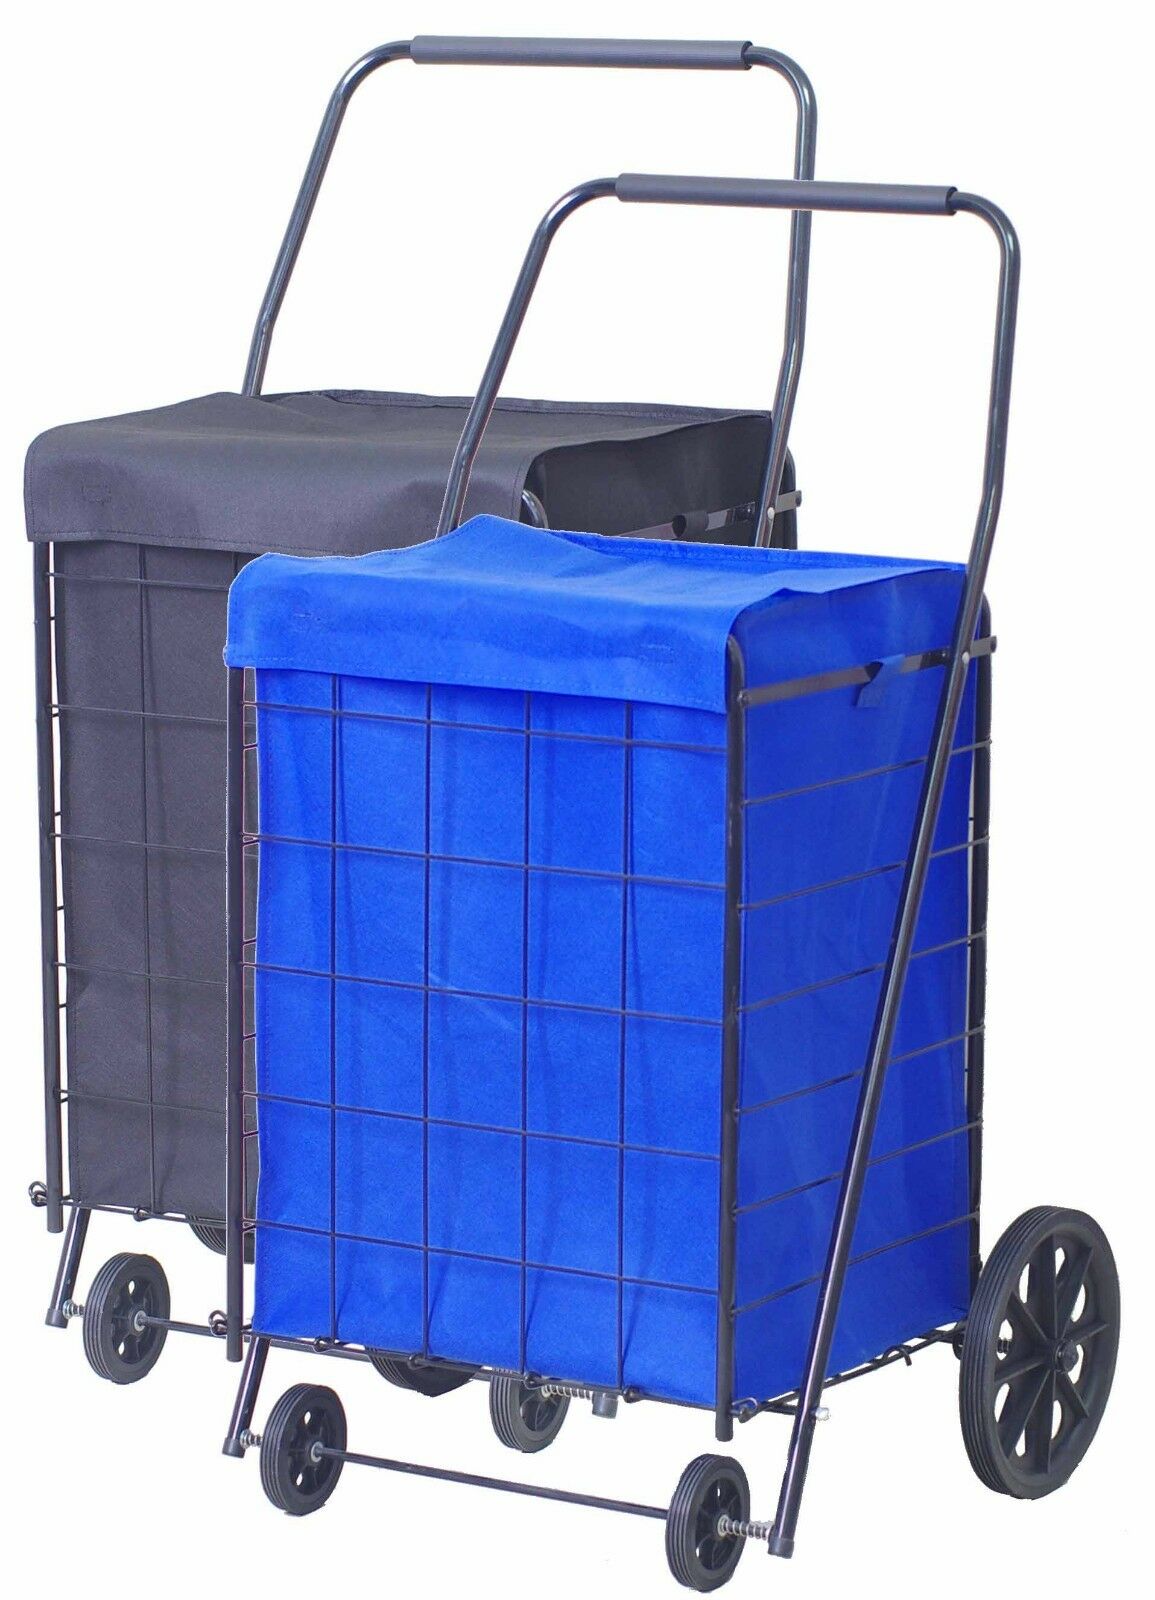 Shopping Cart's Pvc Liner Bag,16 D X 17 W X 24 H Inches,1 Pc Liner Bag